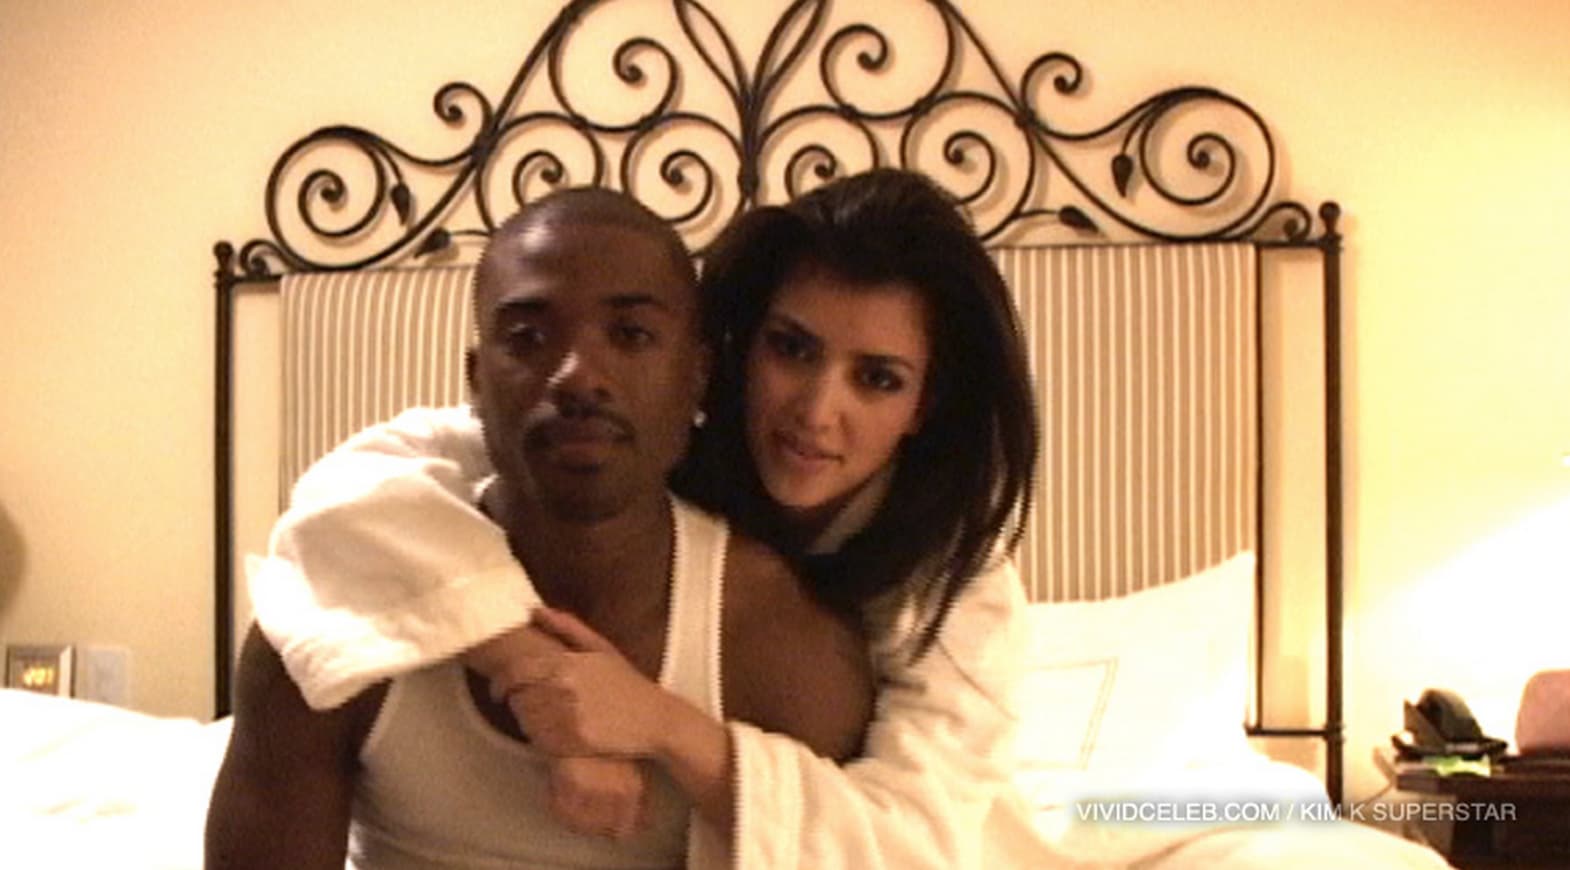 Kim kardashians sex tape full video